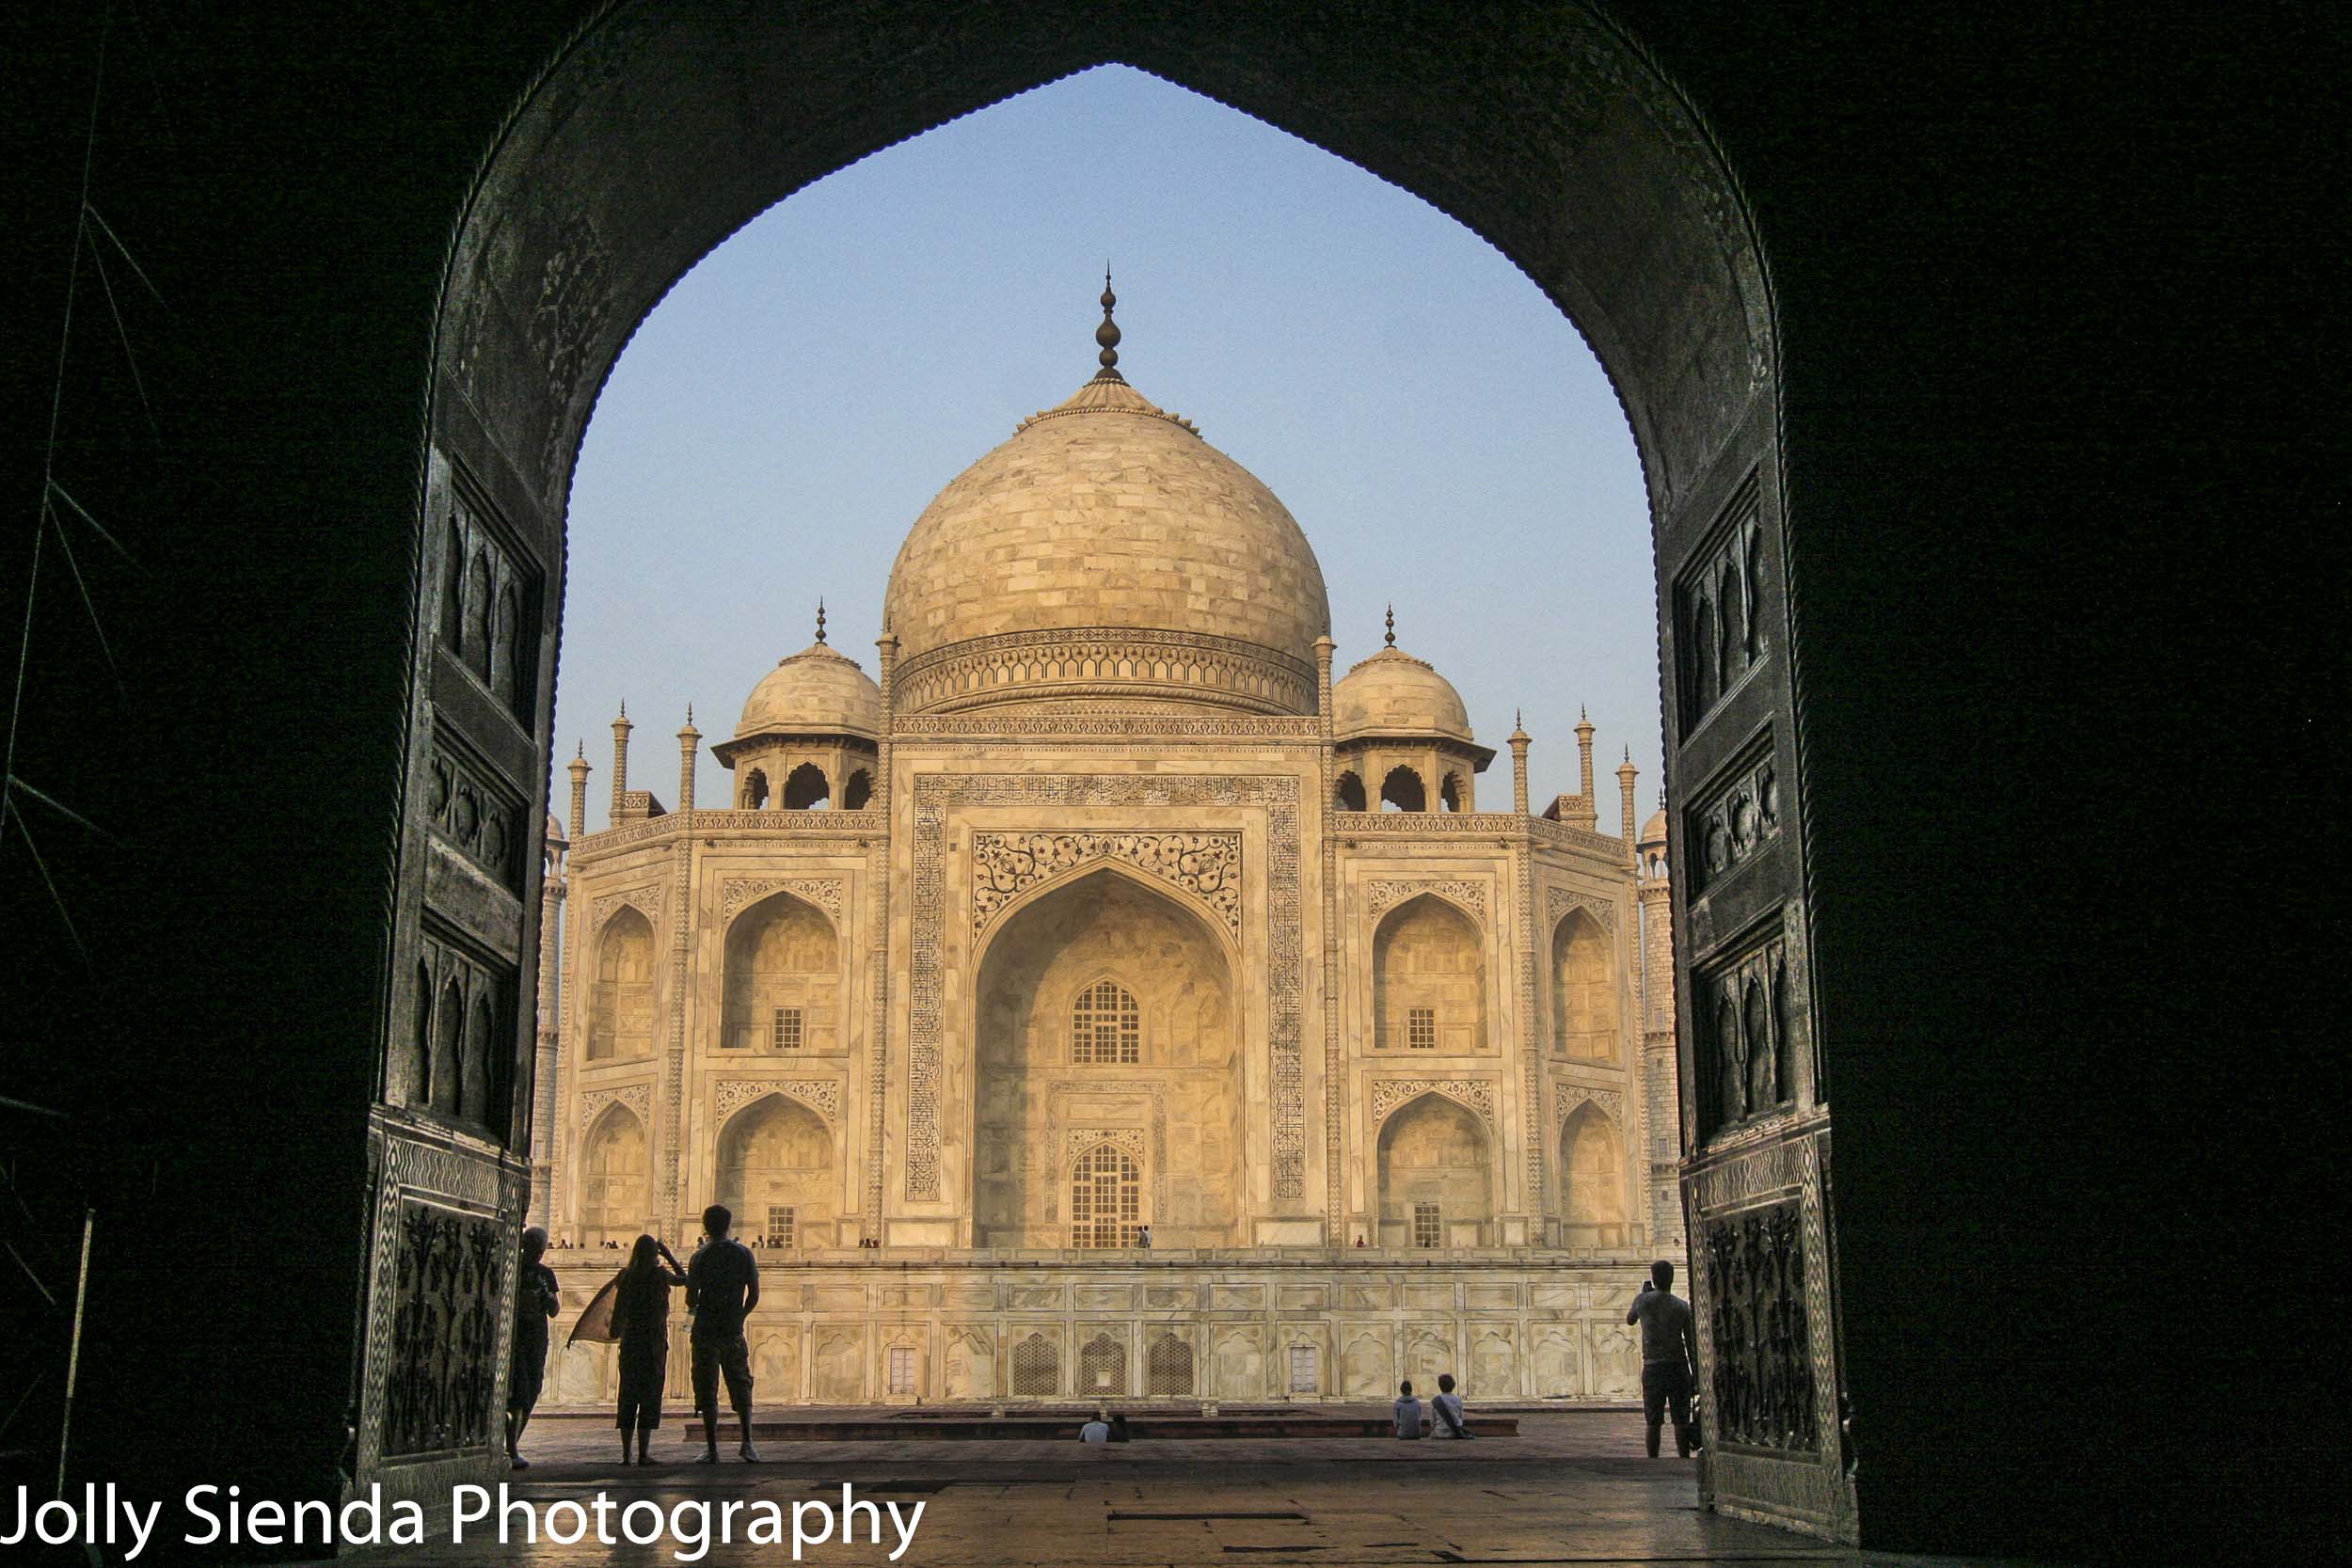 Large doorway leads to the Taj Mahal